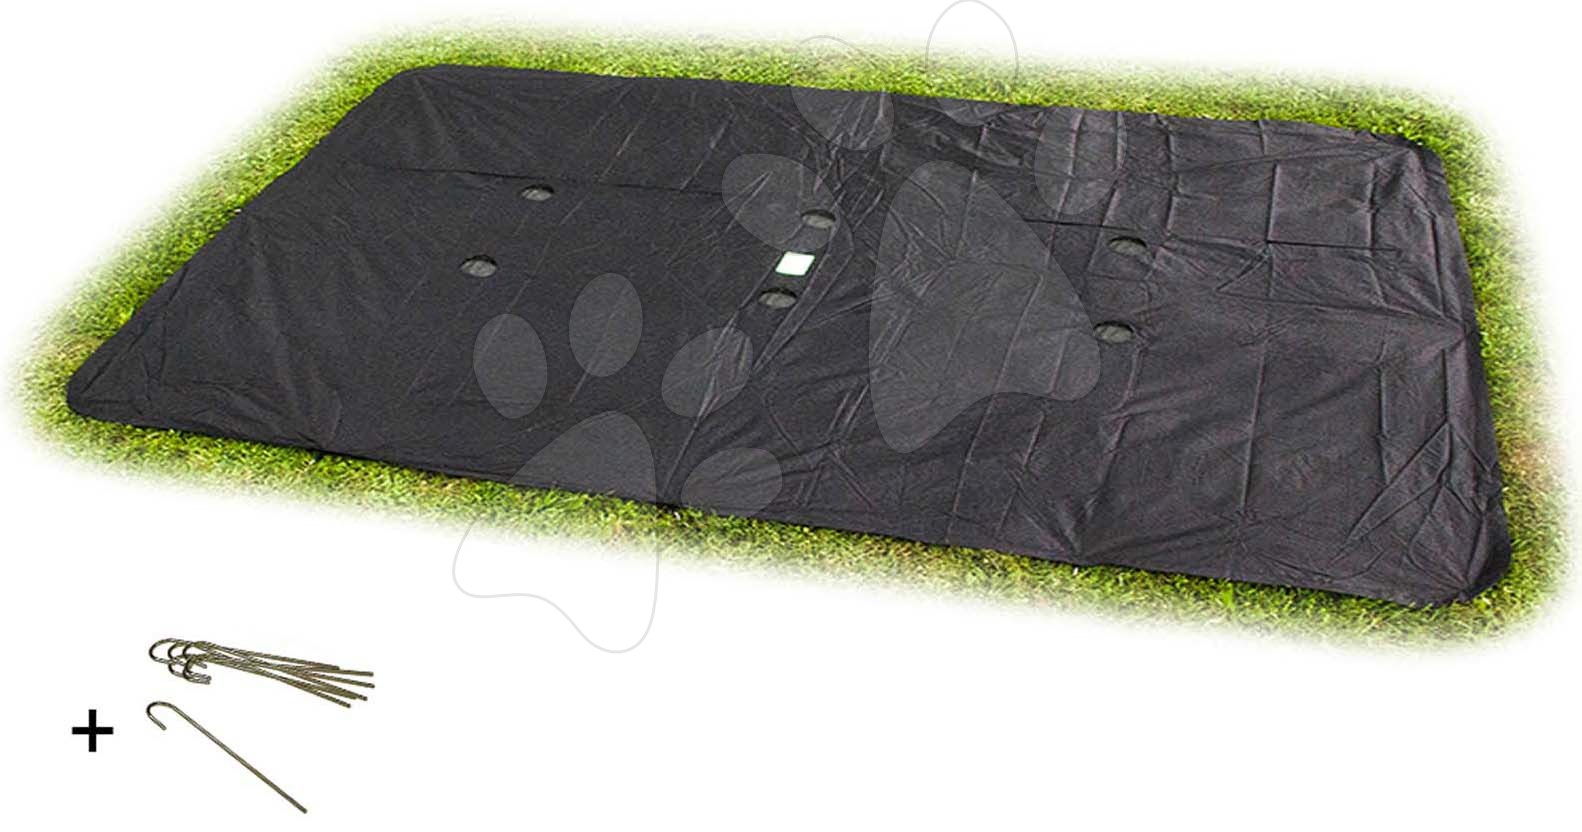 Krycia plachta Weather Cover ground level trampoline rectangular Exit Toys pre trampolíny s rozmerom 275*458 cm